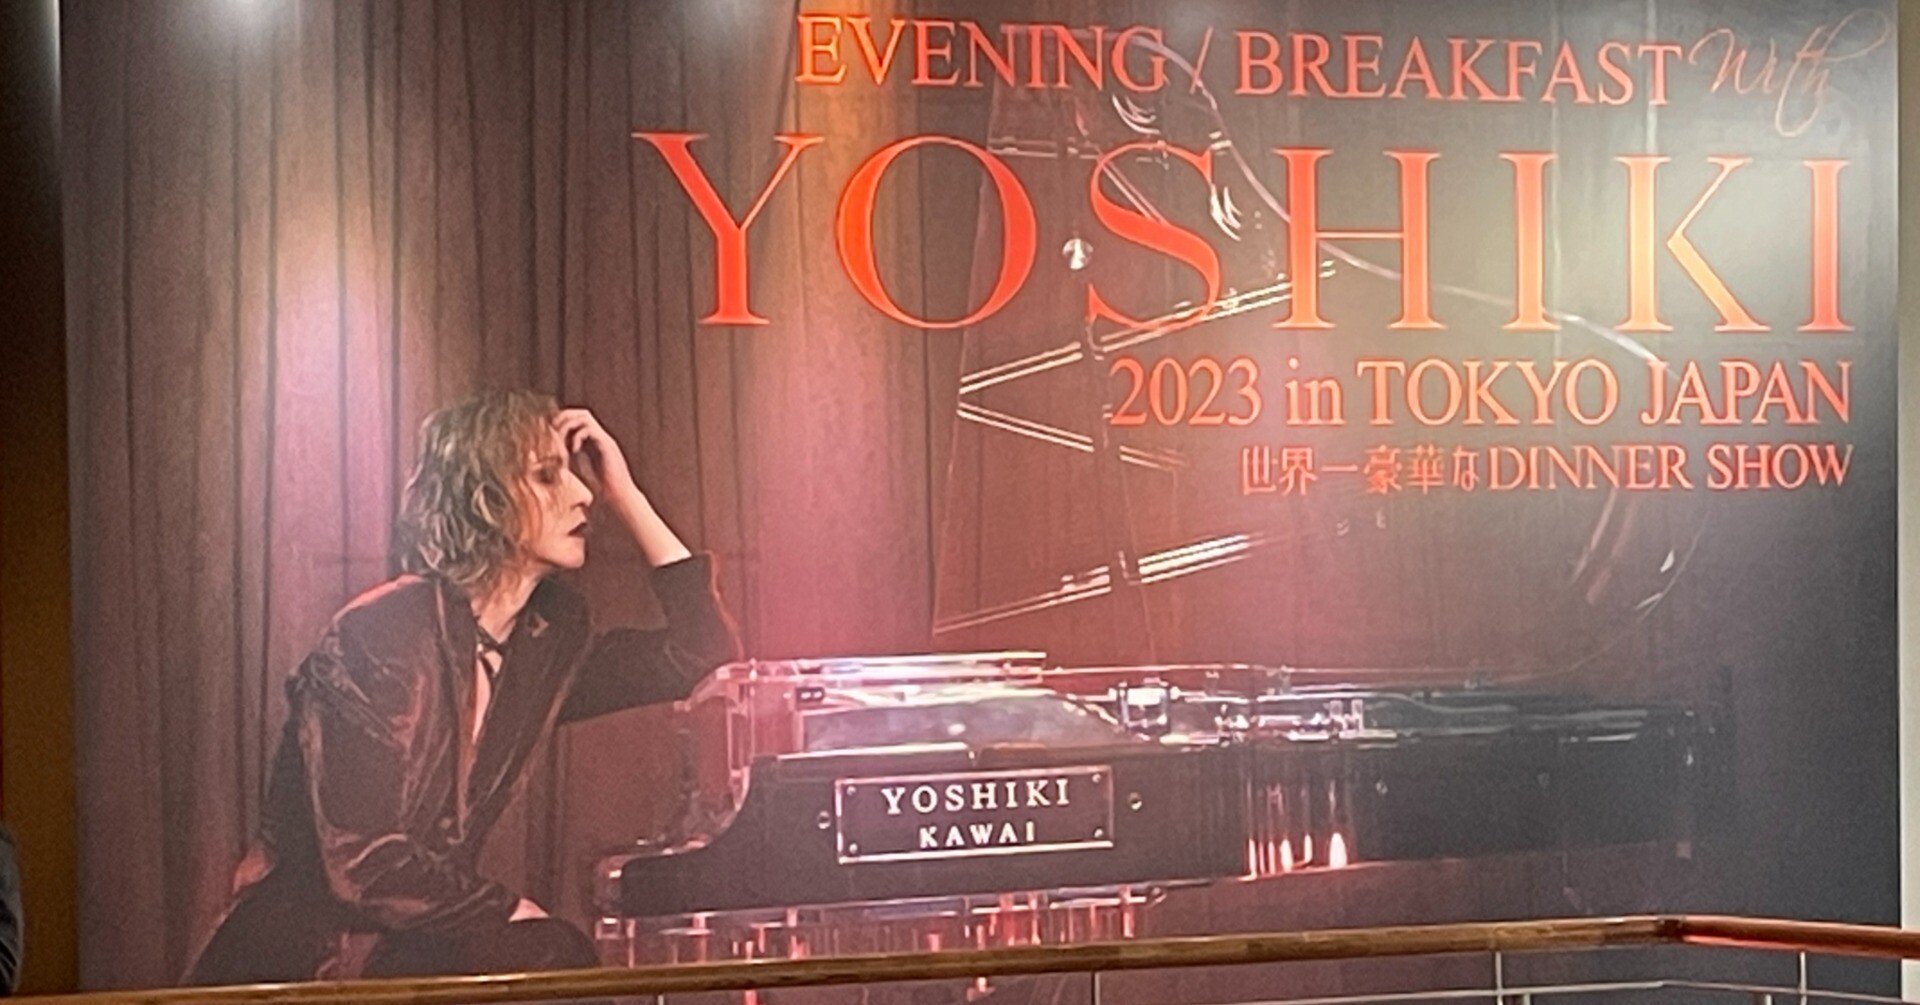 YOSHIKI with breakfast ワイン付き  お土産